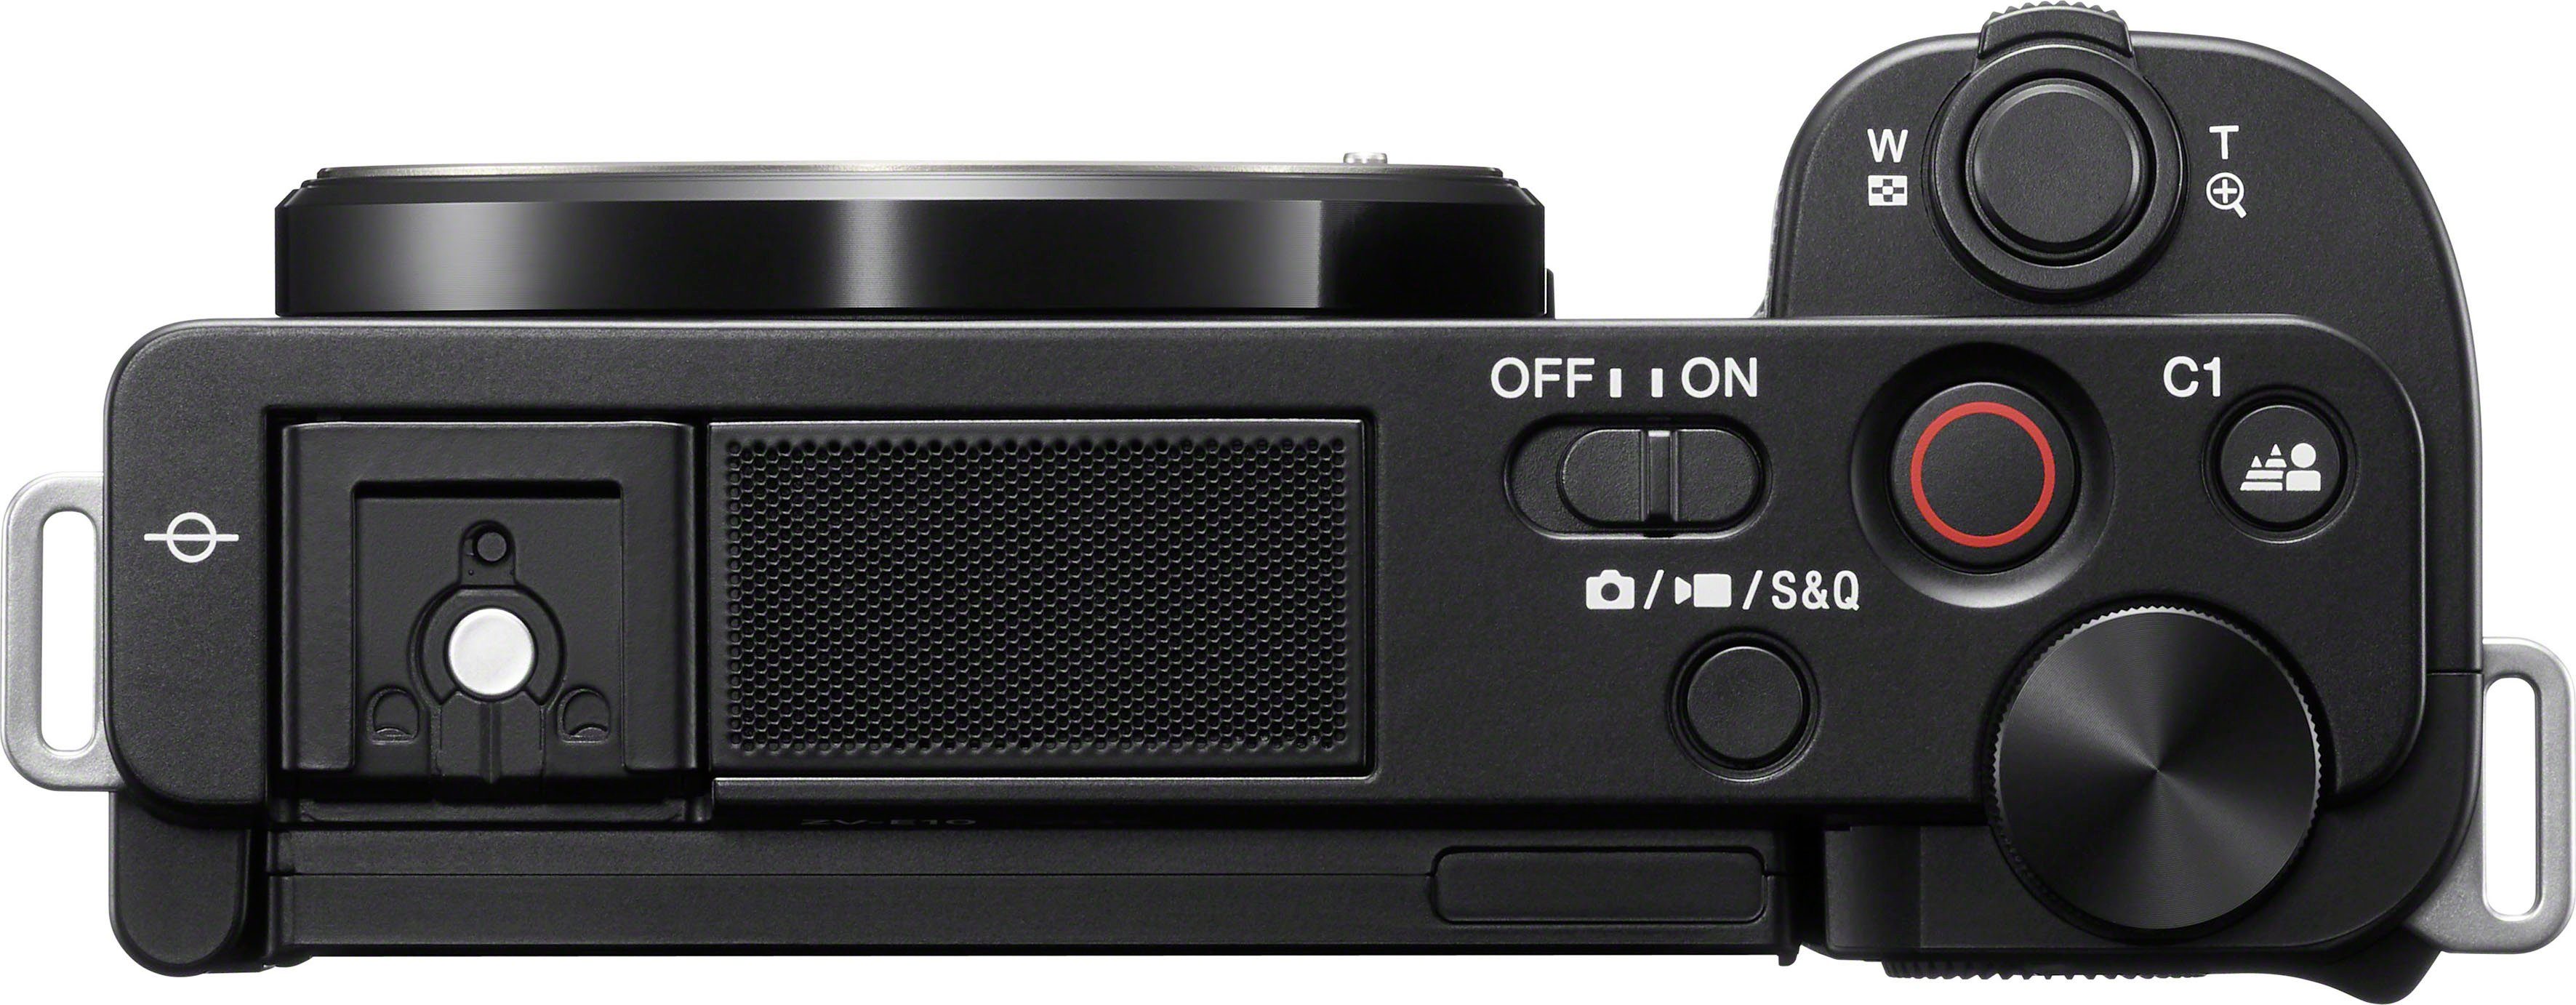 MP, Sony SEL16-50 5.6 mit OSS schwenkbarem 50 - (SELP1650), F3.5 Objektiv) inkl. - PZ ZV-E10L (WiFi), WLAN Vlog-Kamera Display 24,2 Systemkamera Bluetooth, 16 (E mm